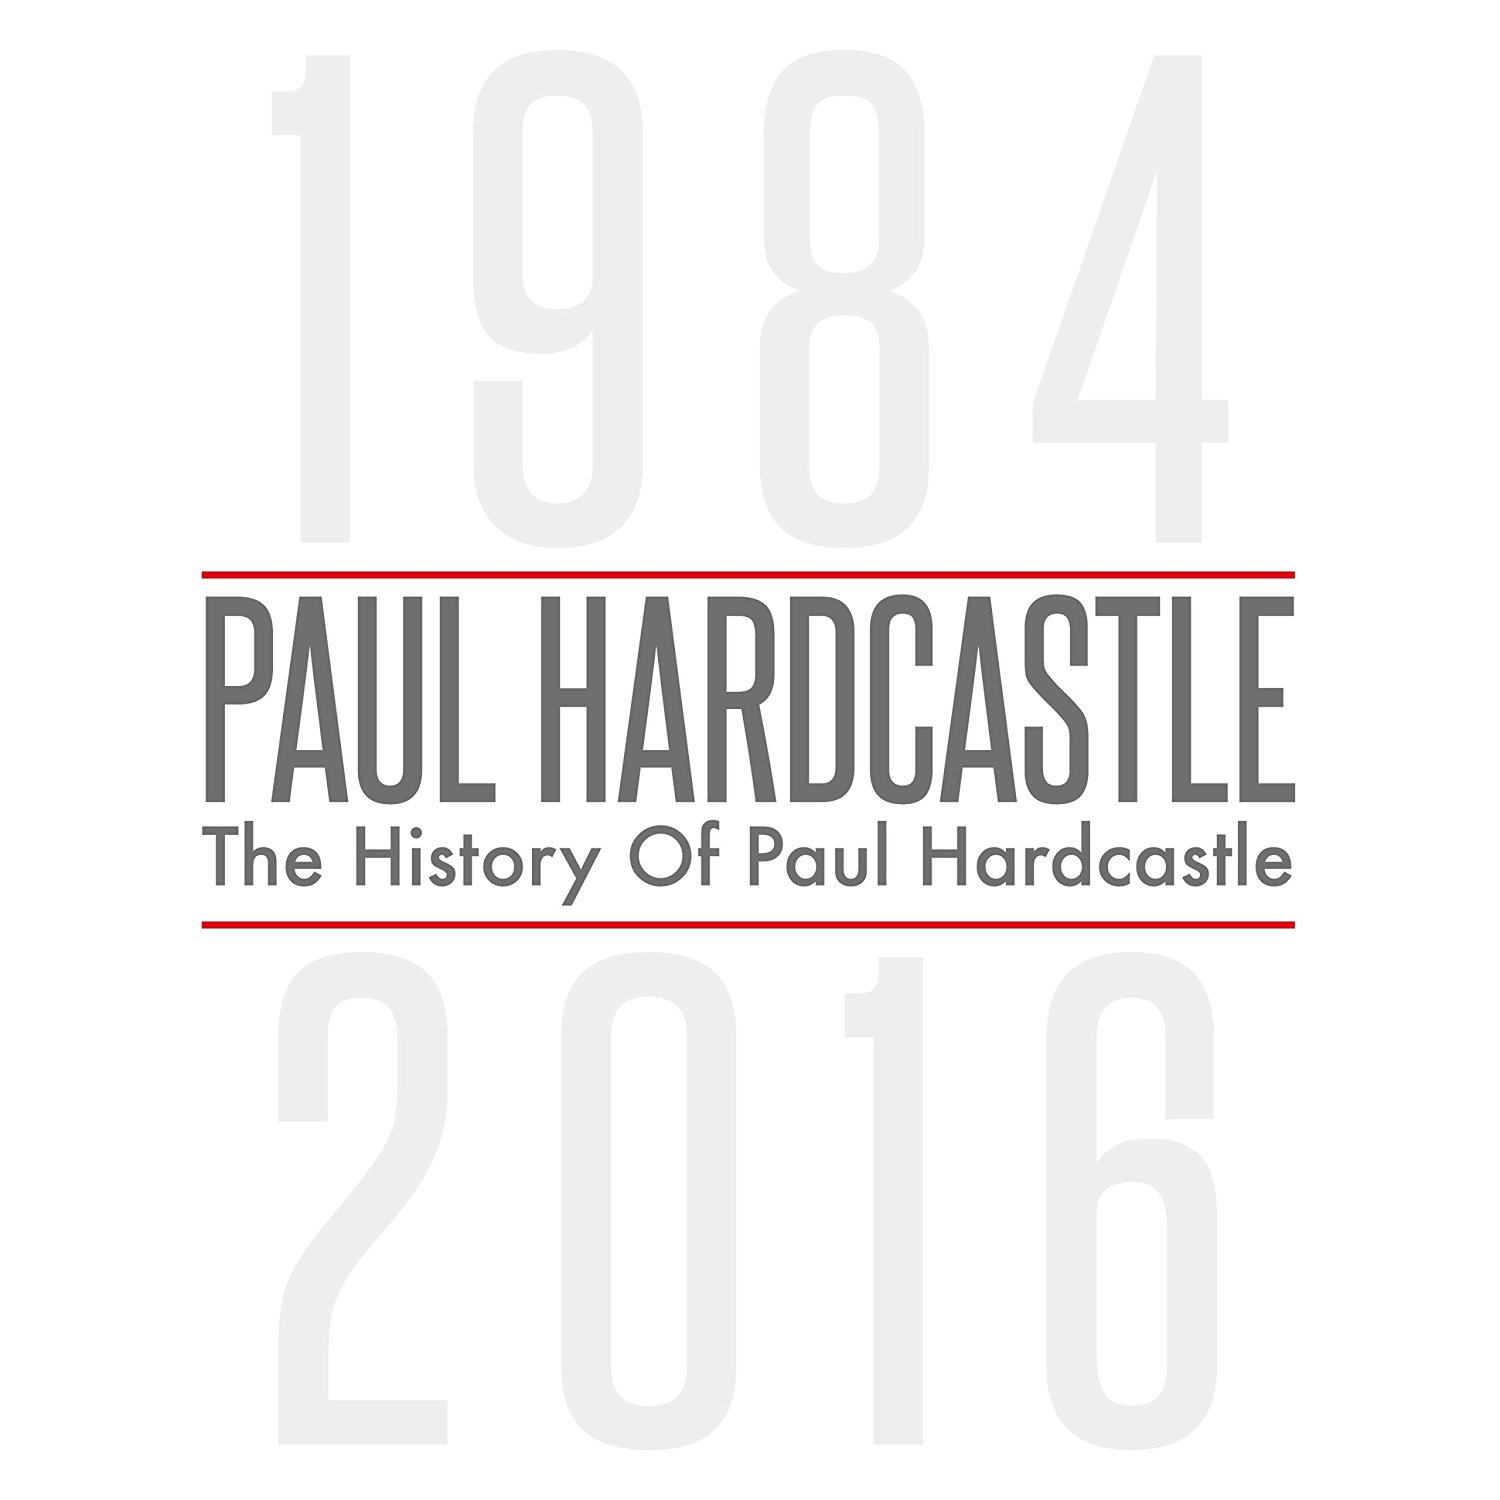 PAUL HARDCASTLE - The History Of Paul Hardcastle cover 